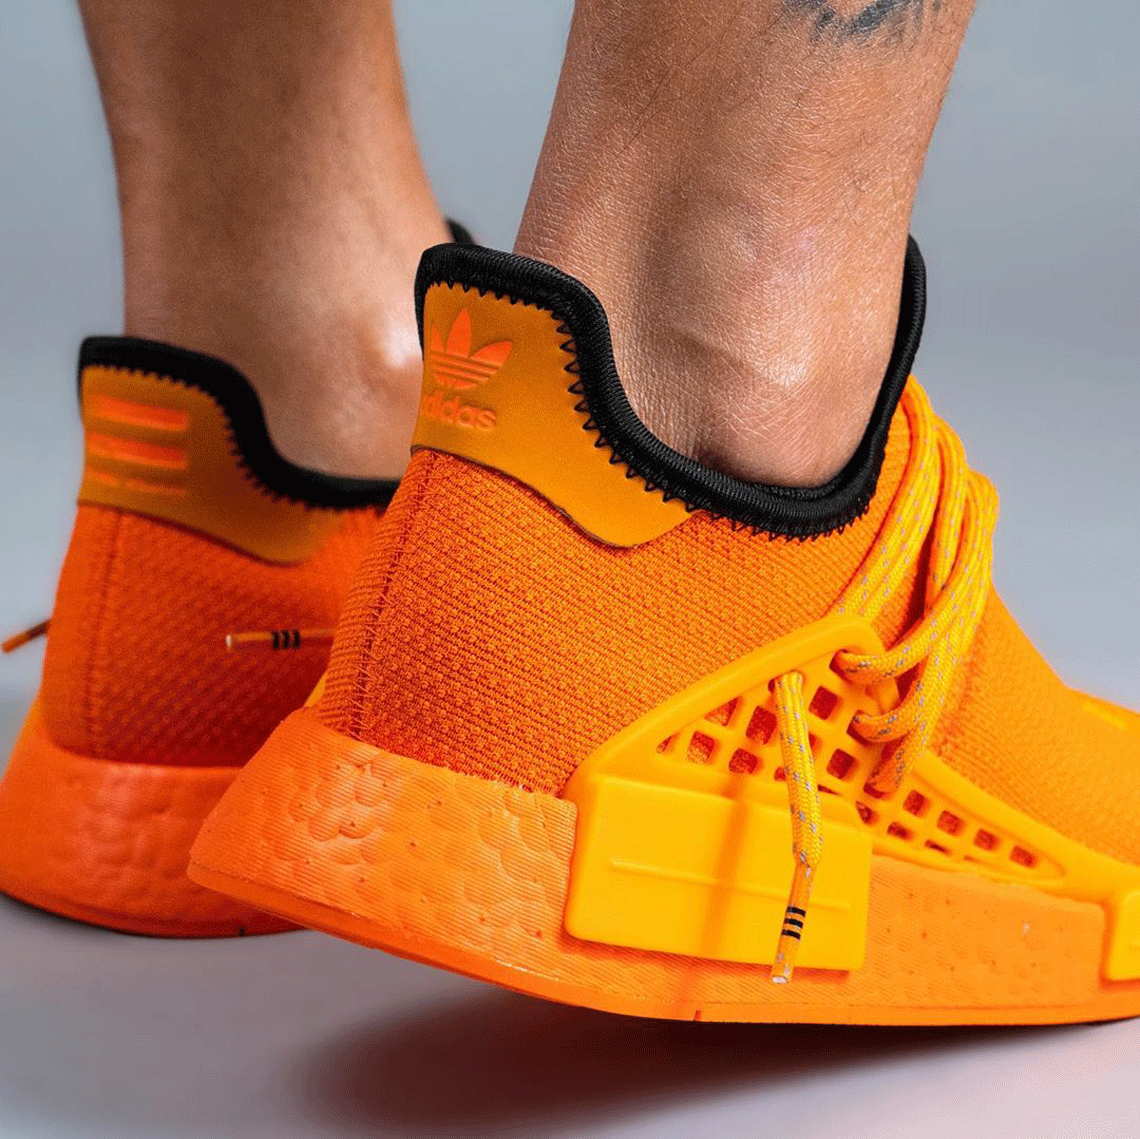 Adidas HU NMD Human Race Shoes Pharrell Williams Orange GY0095